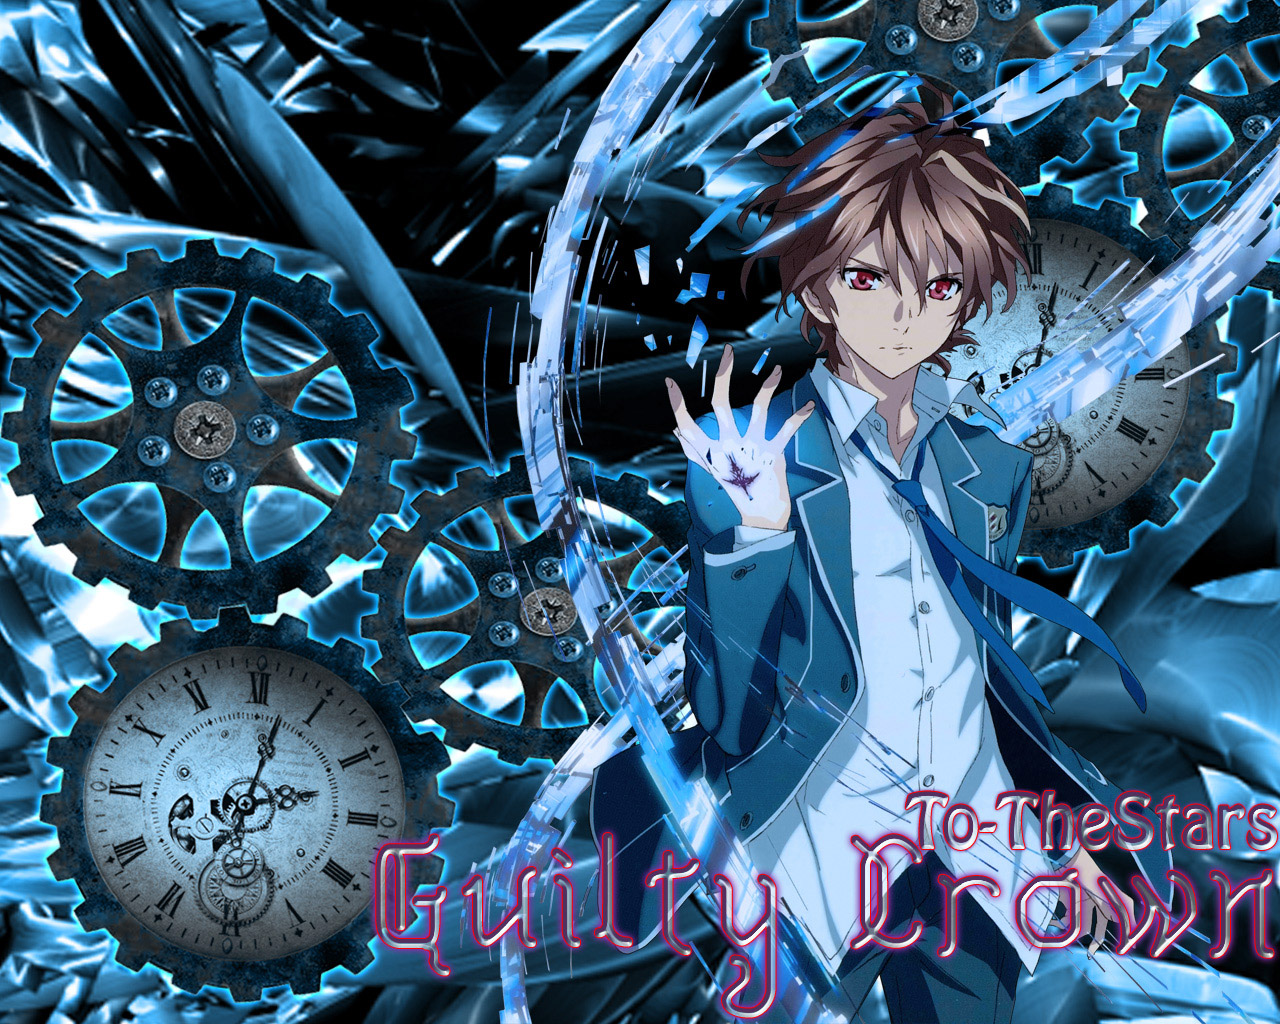 Anime Guilty Crown HD Wallpaper